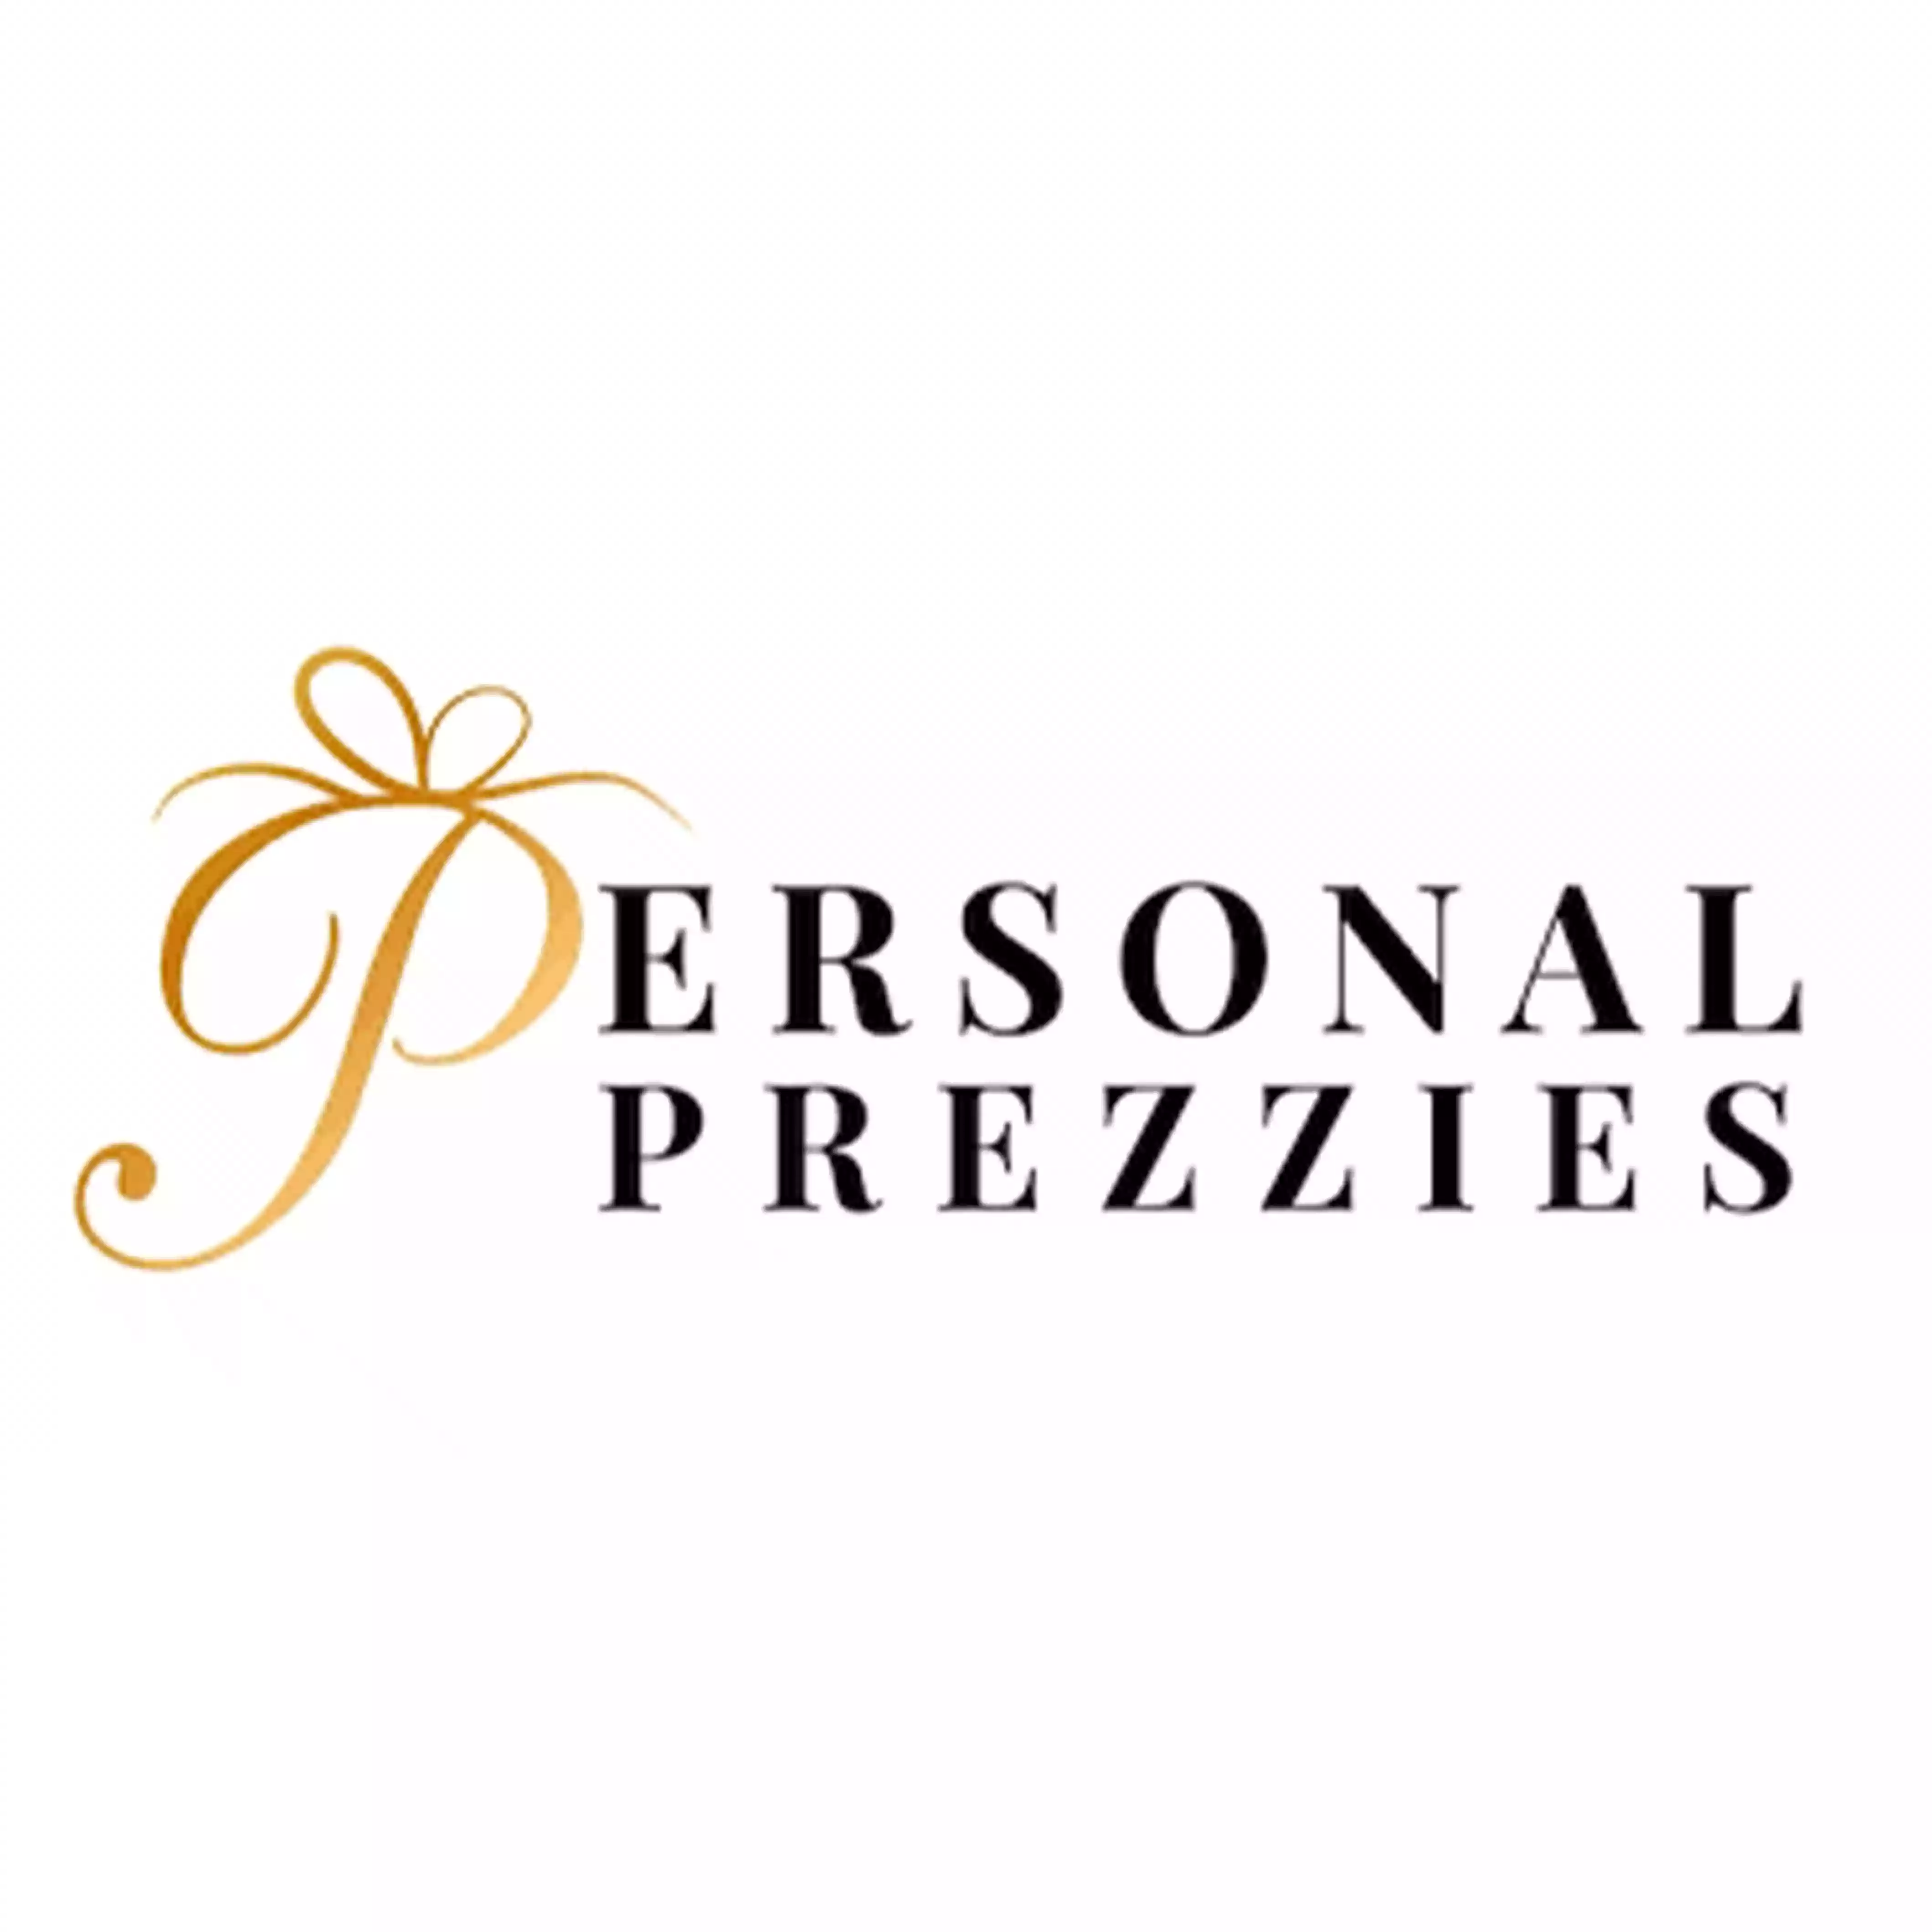 Personal Prezzies coupon codes